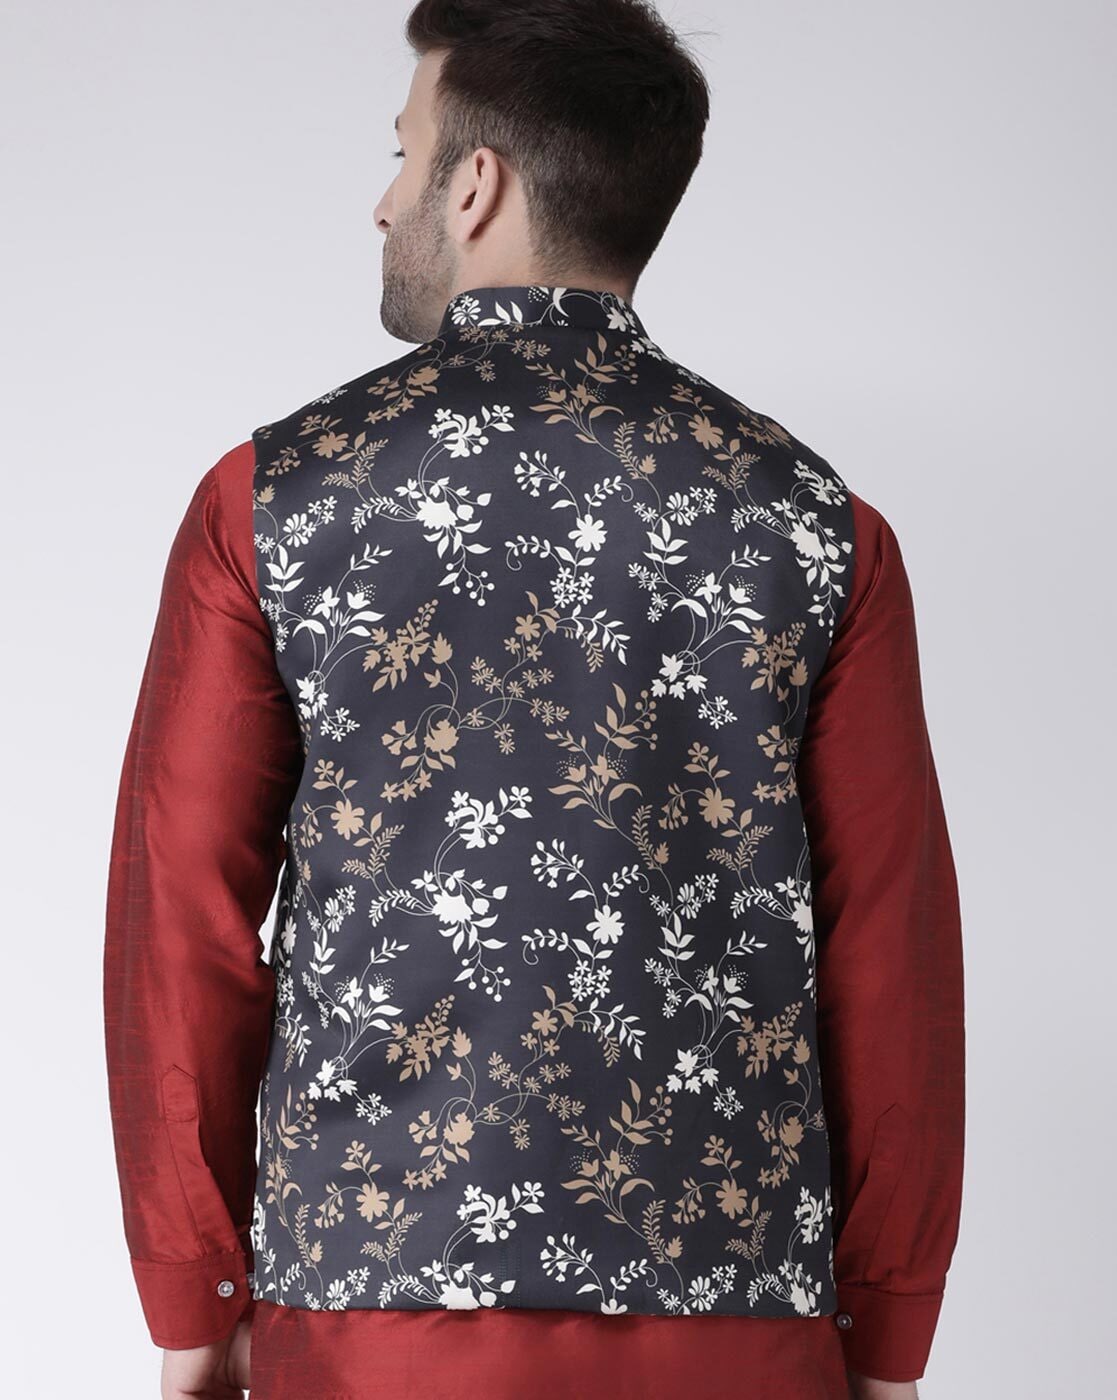 Buy Veirdo® Floral Print Zip Up Cotton Shacket/Jacket for Men & Boys (S)  Maroon at Amazon.in